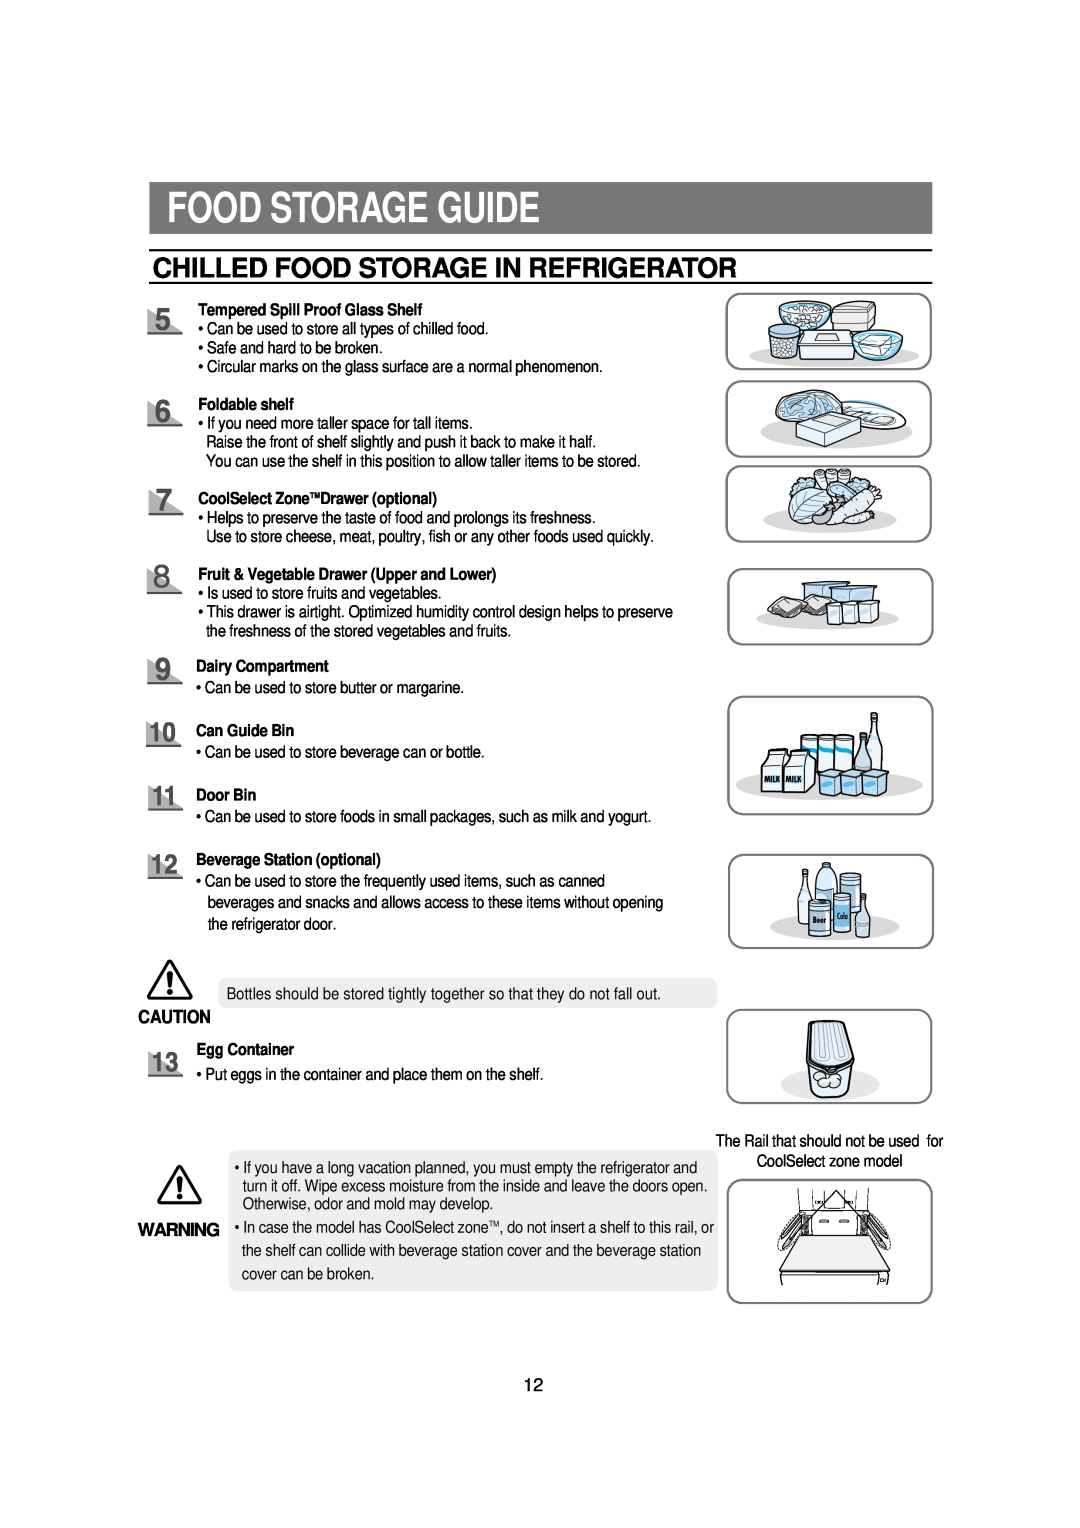 Samsung RSE8KPUS1/XEO Chilled Food Storage In Refrigerator, Food Storage Guide, Tempered Spill Proof Glass Shelf, Door Bin 